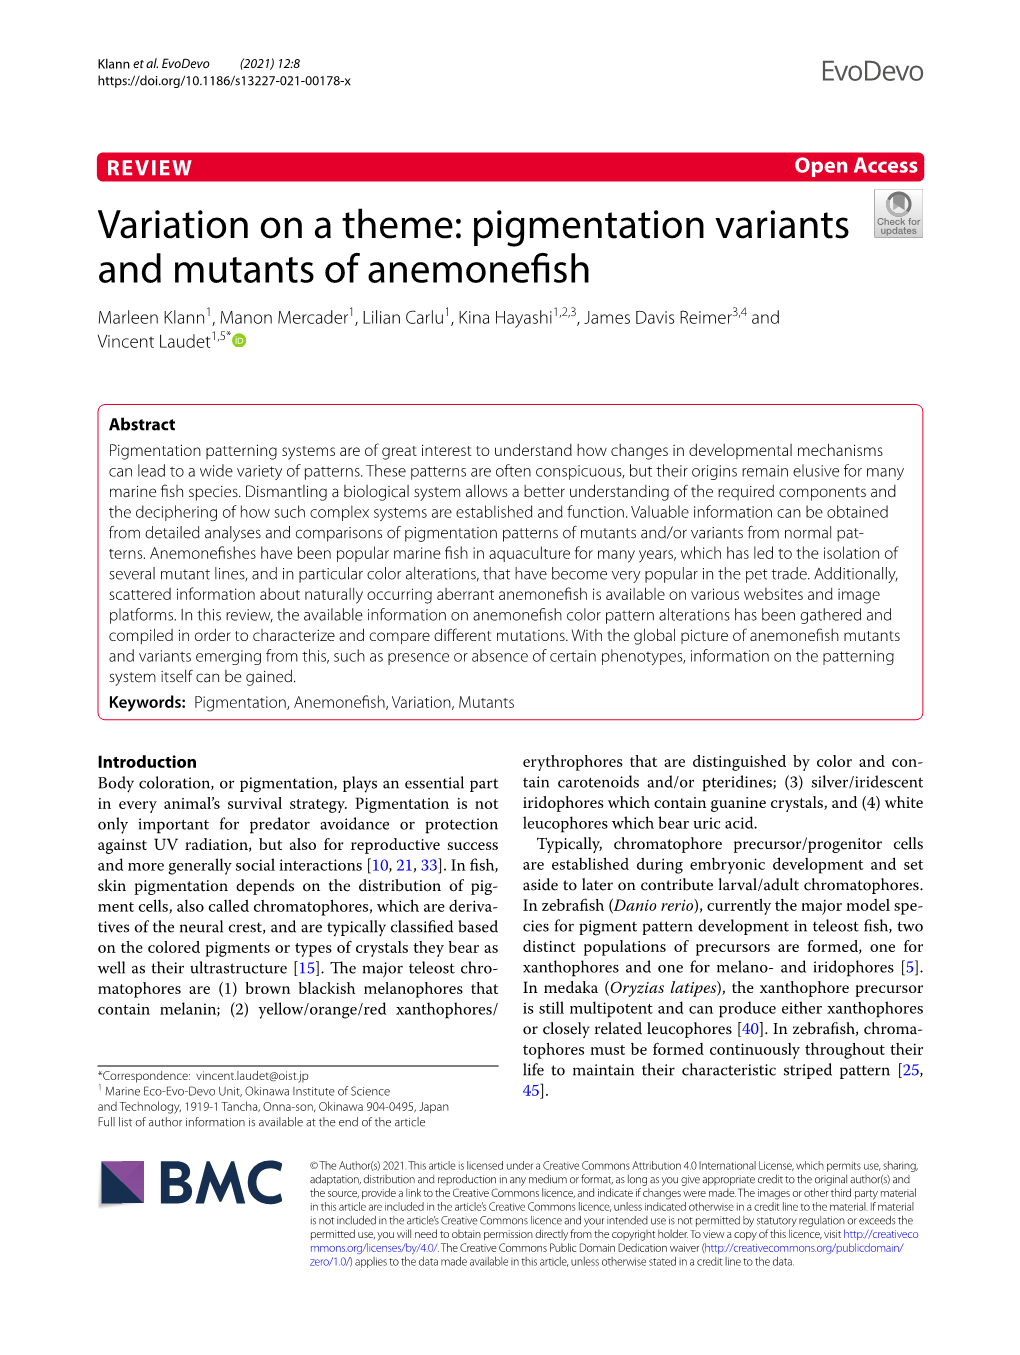 Pigmentation Variants and Mutants of Anemonefish